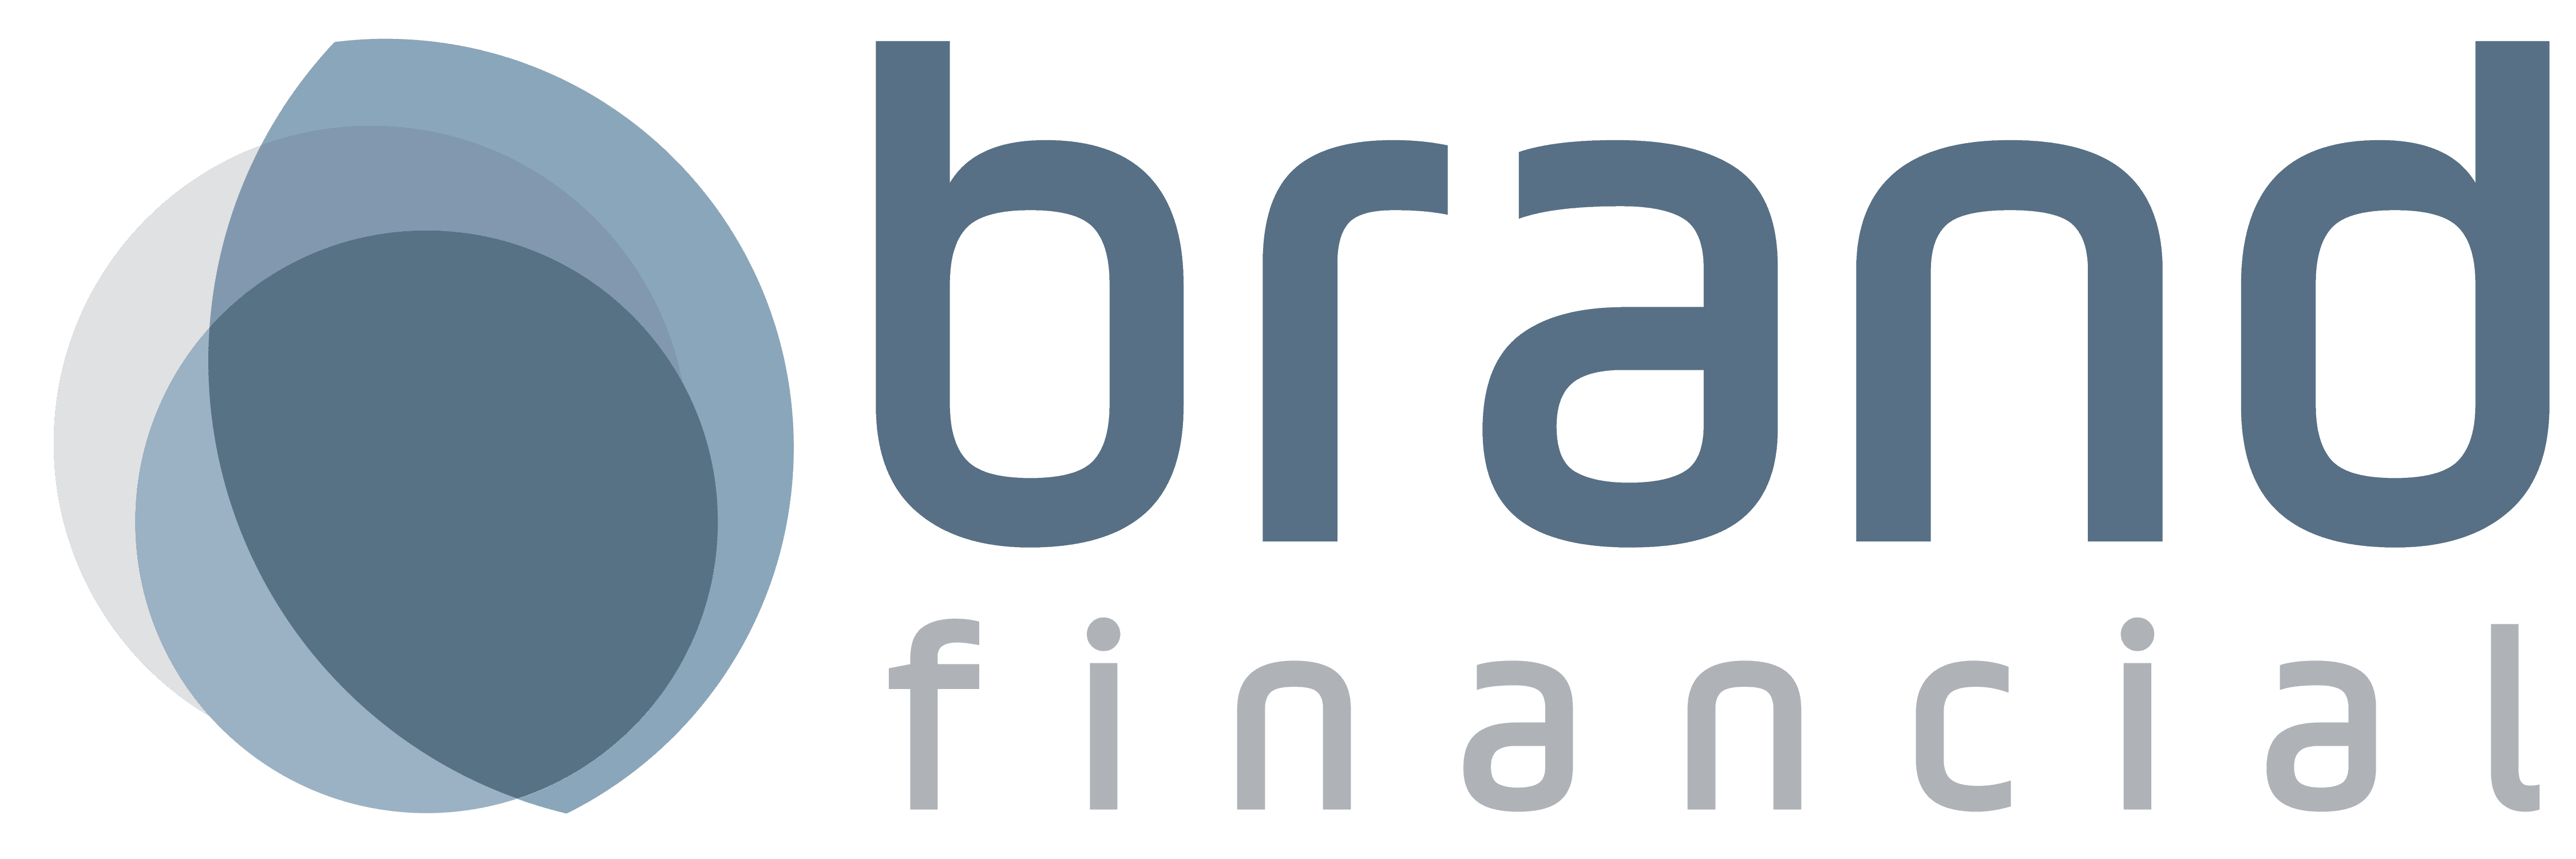 Brand Financial_Primary Logo